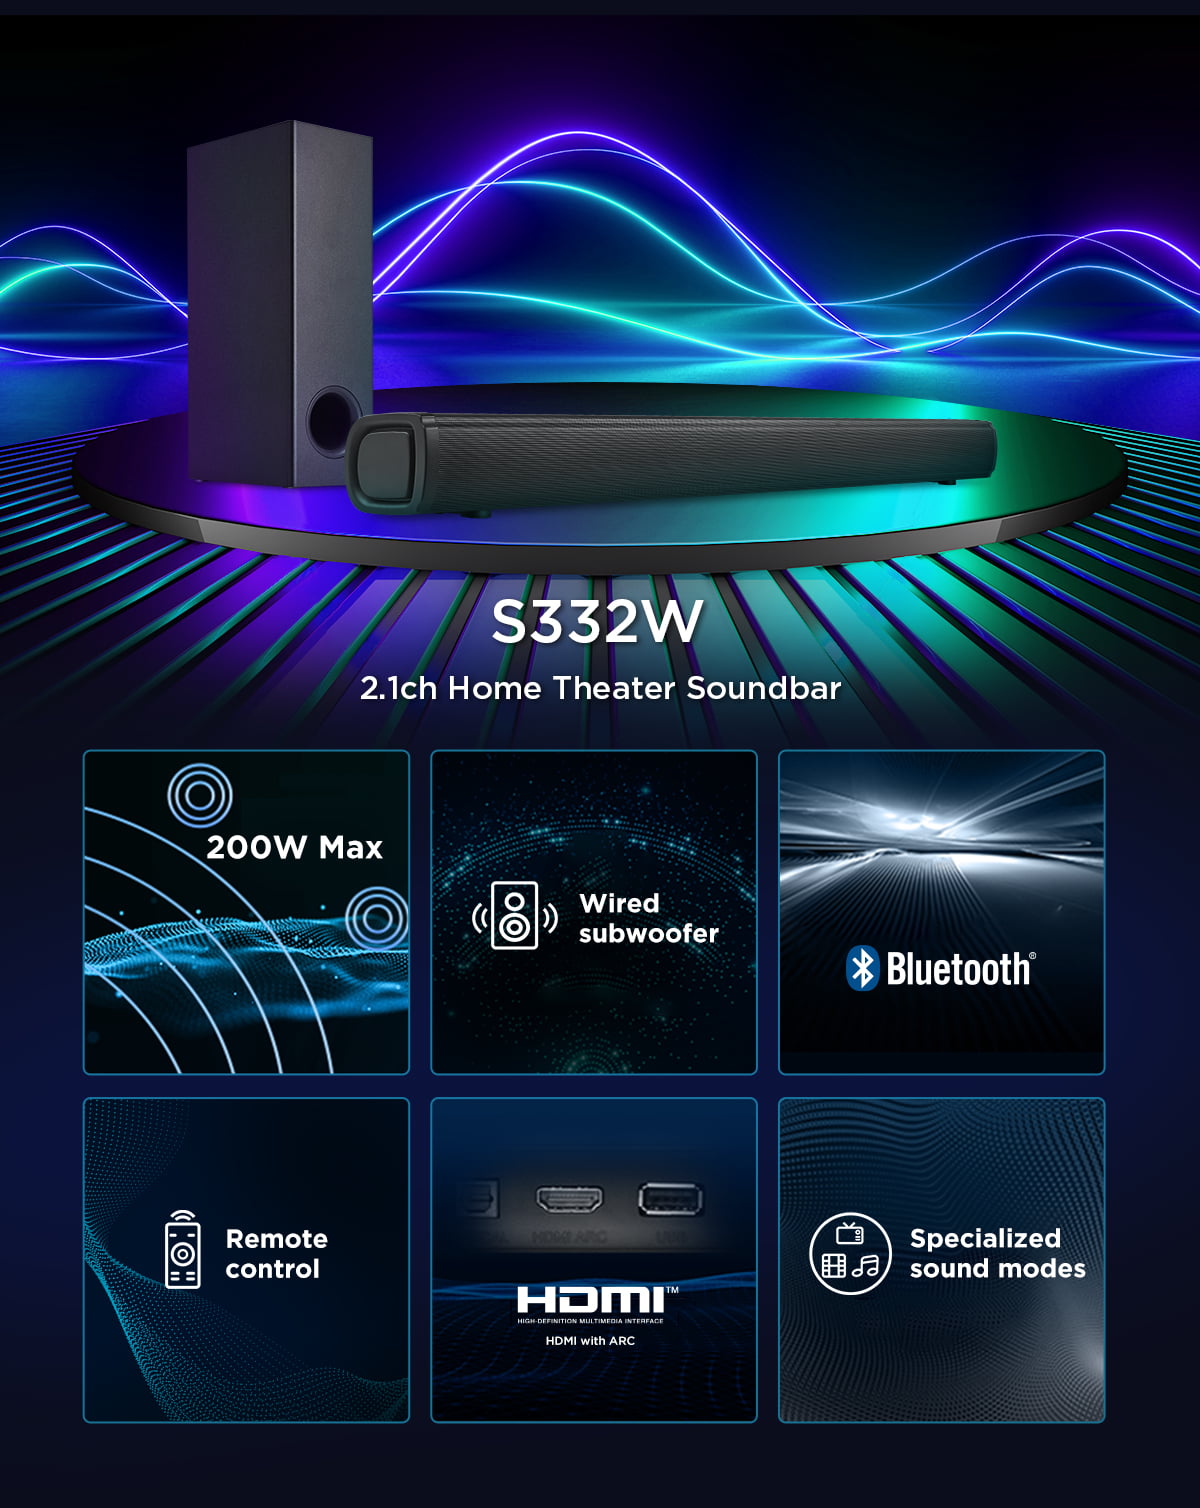  TCL S332W 2.1ch Home Theater Soundbar